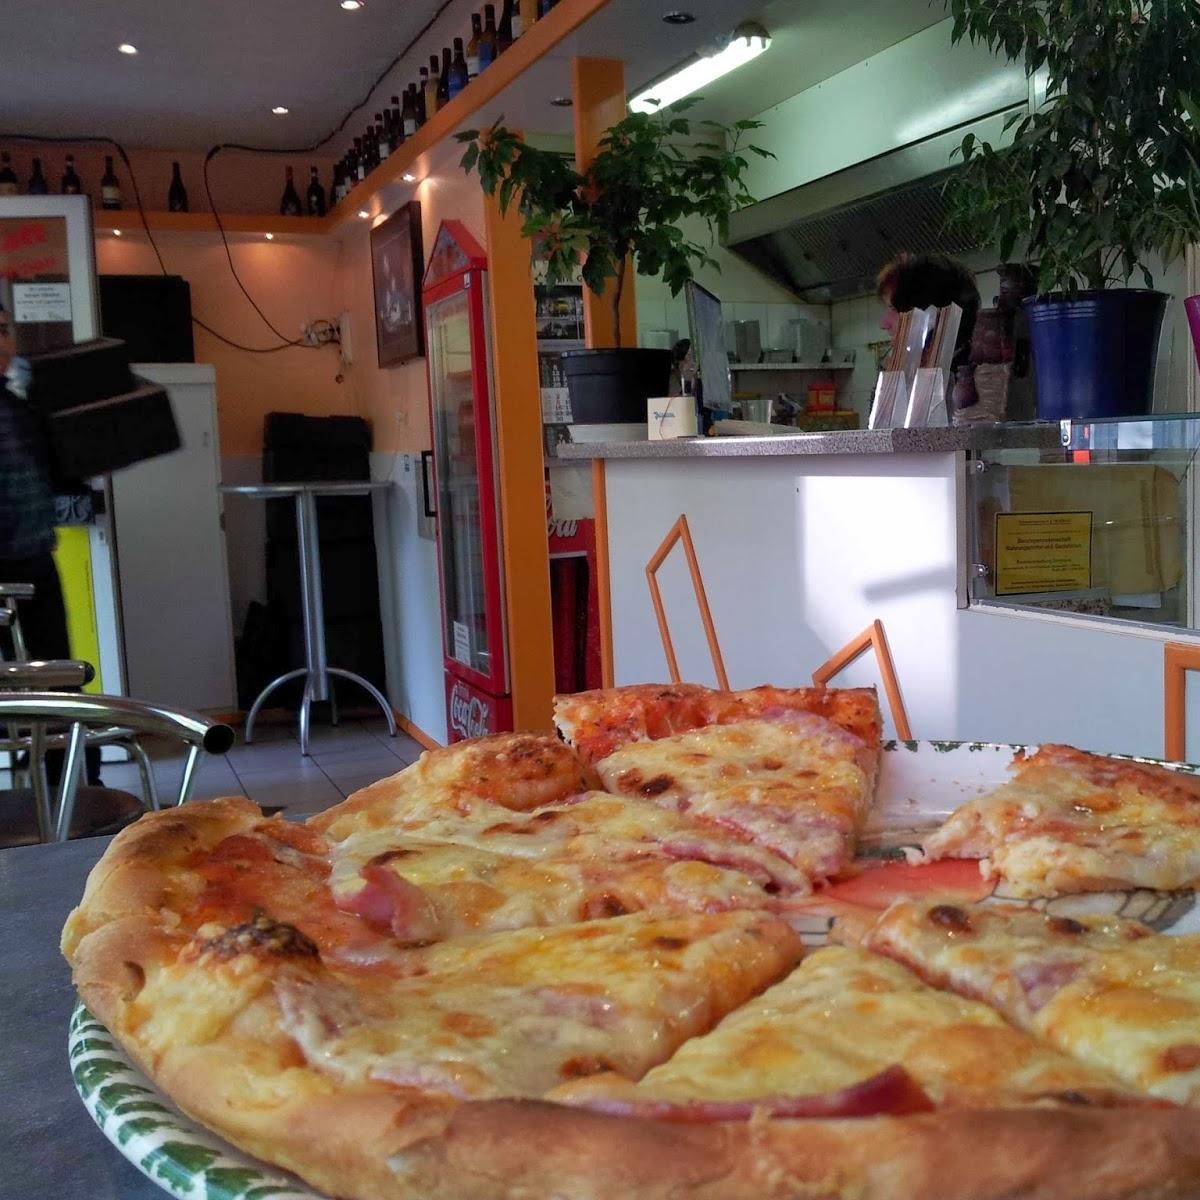 Restaurant "City-Pizza" in Gütersloh